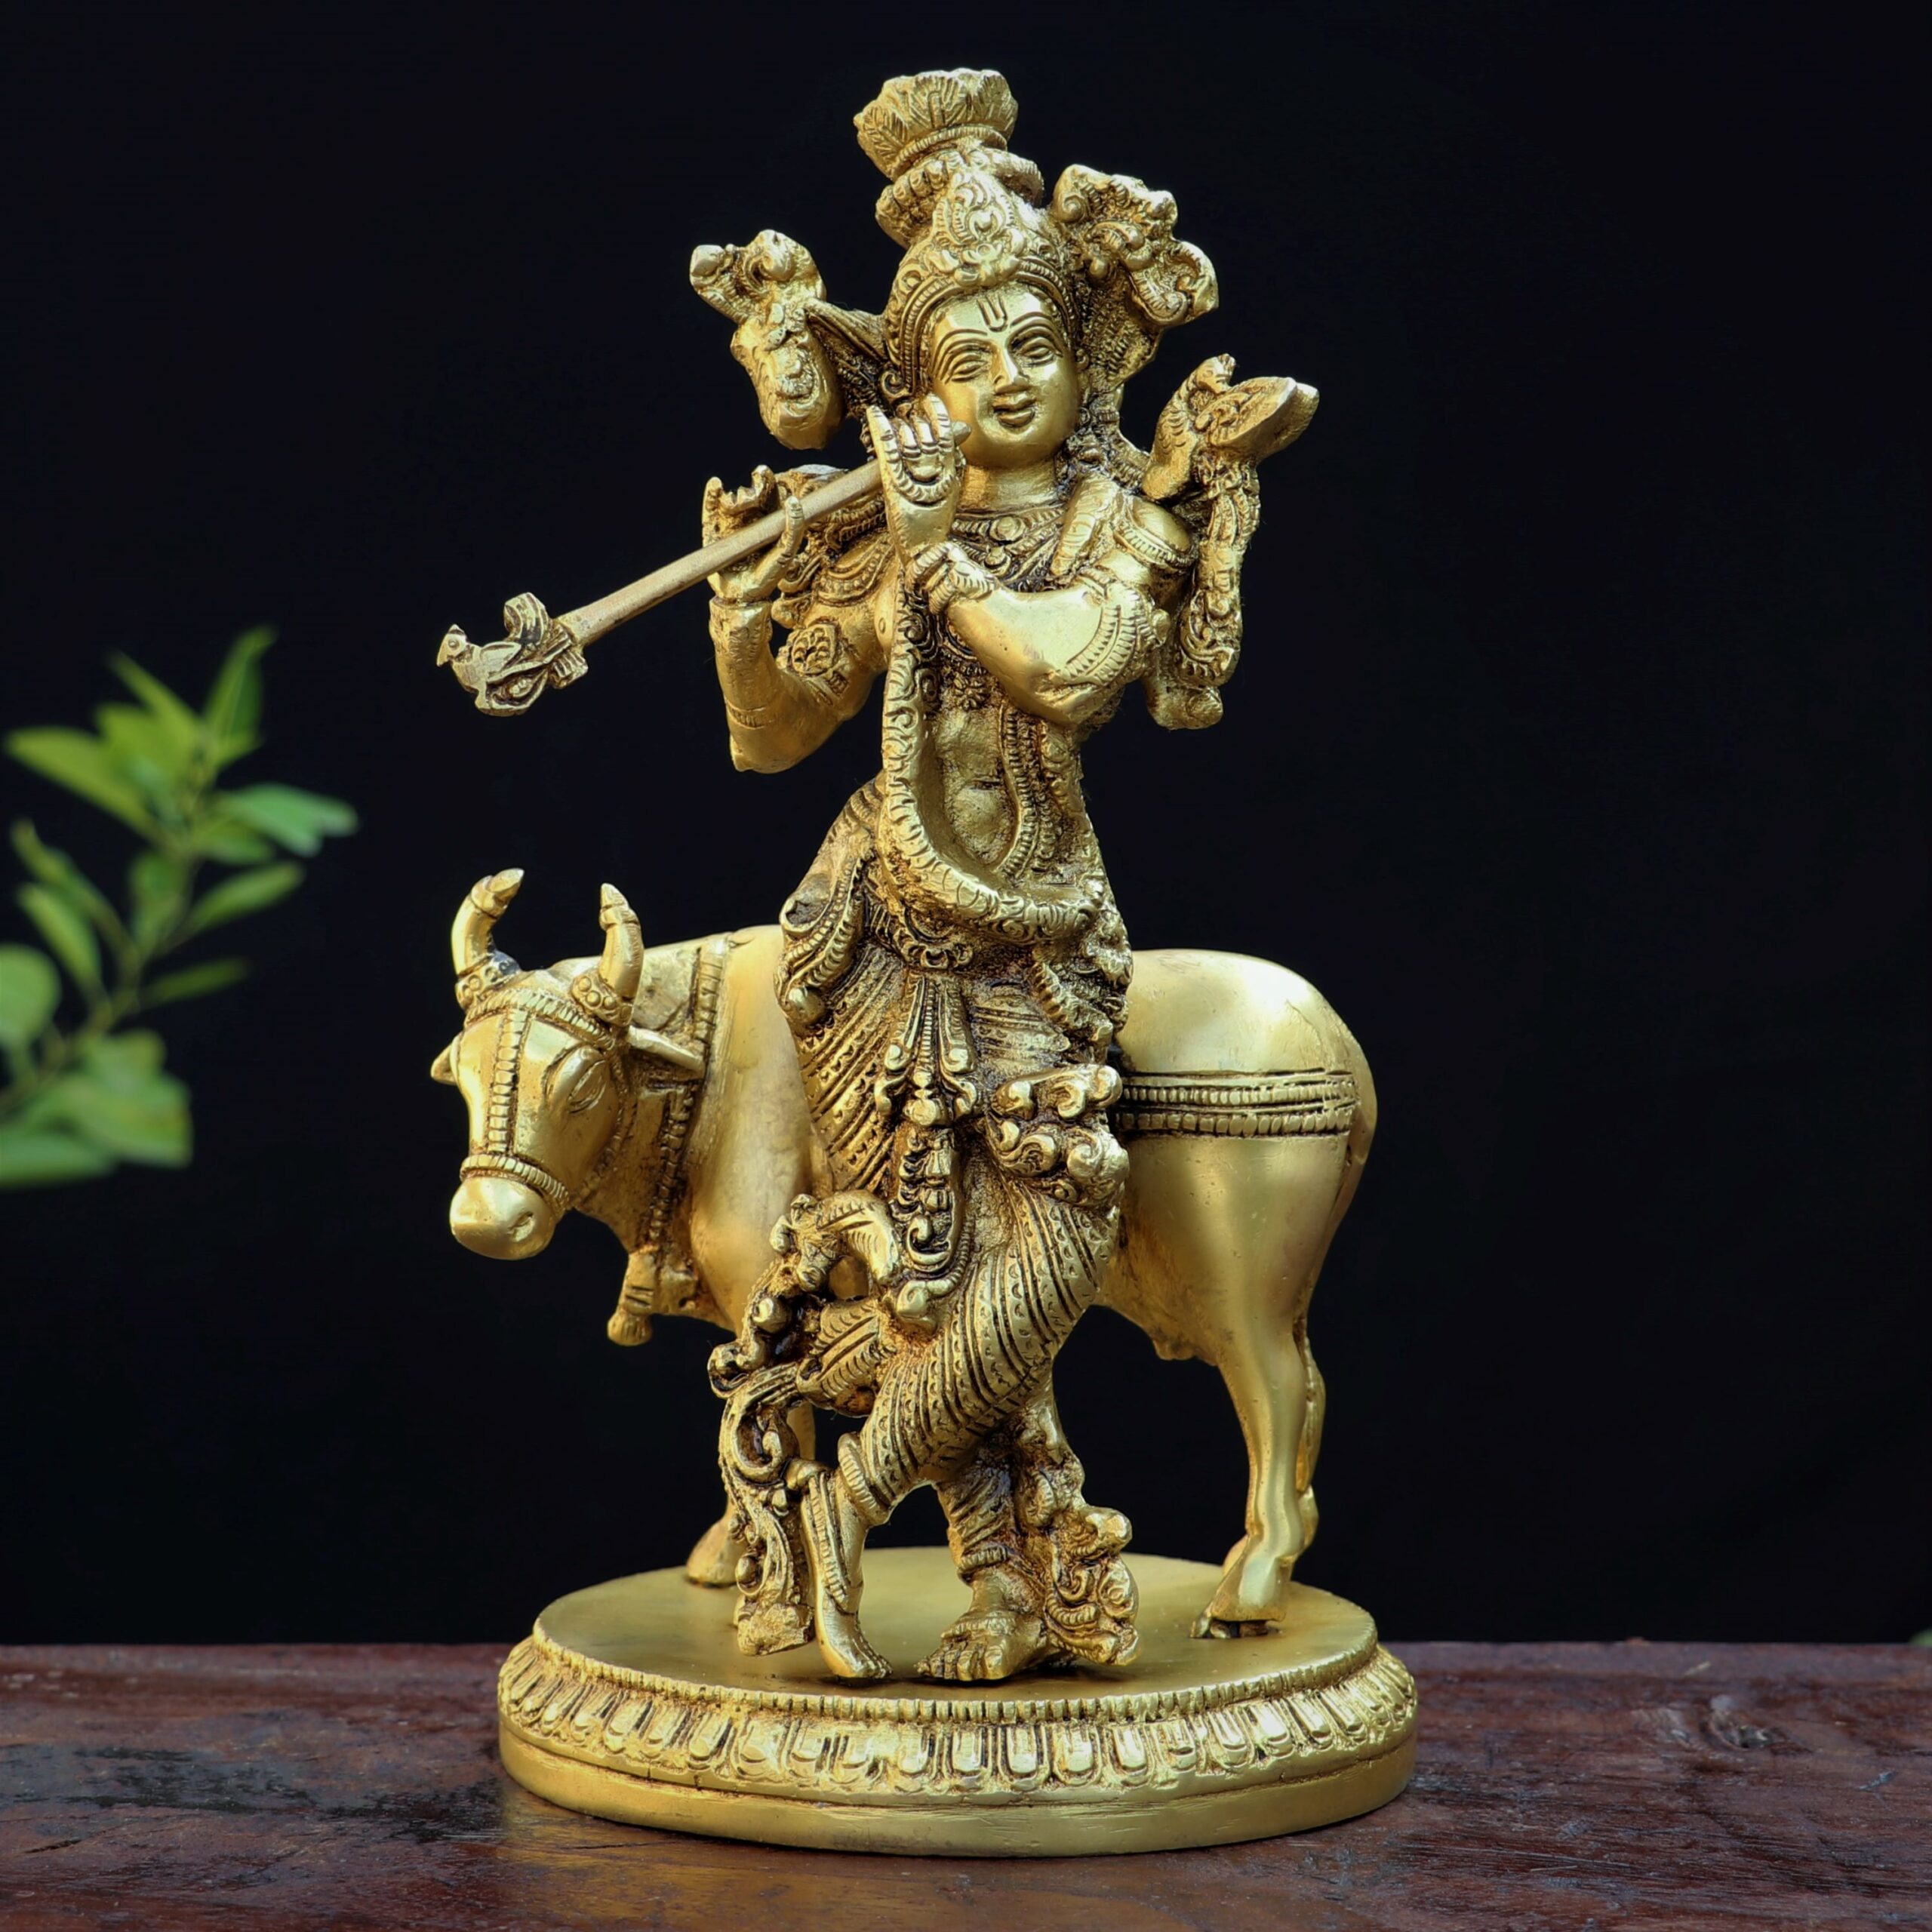 Golden Brass Radha Krishna Statue, for Worship at Rs 55000/piece